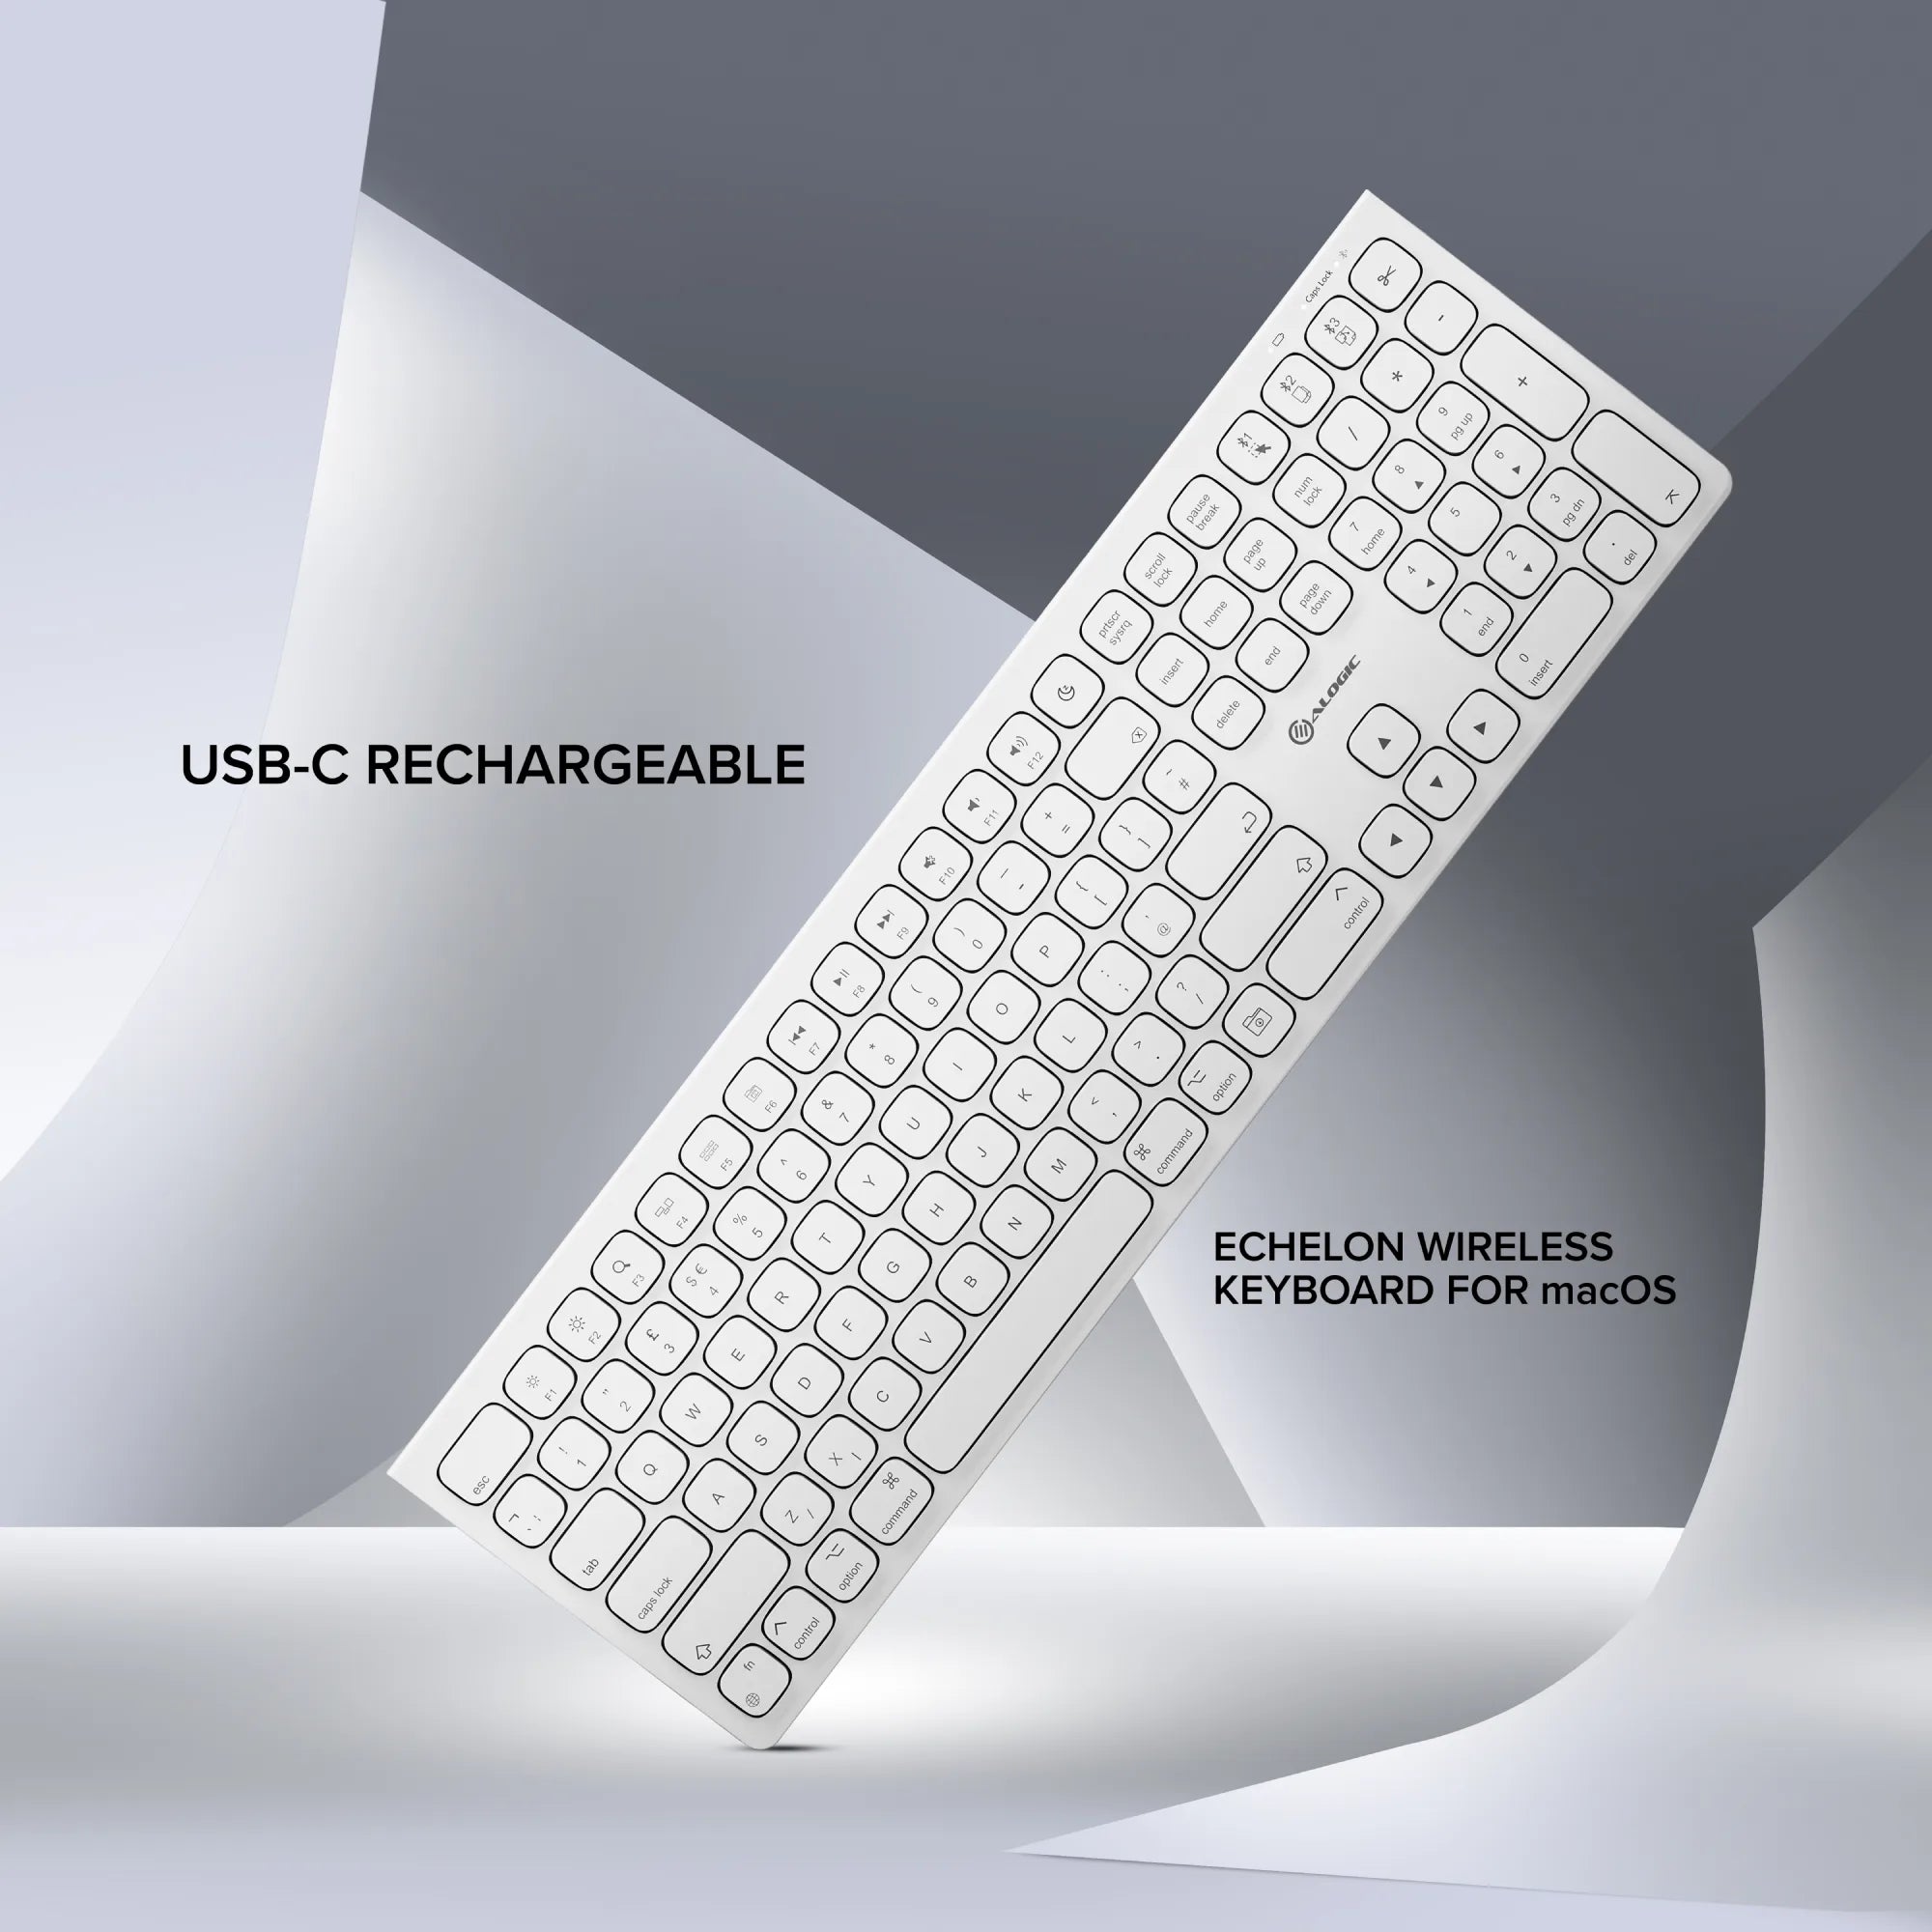 Echelon USB-C Rechargeable Wireless Keyboard for macOS